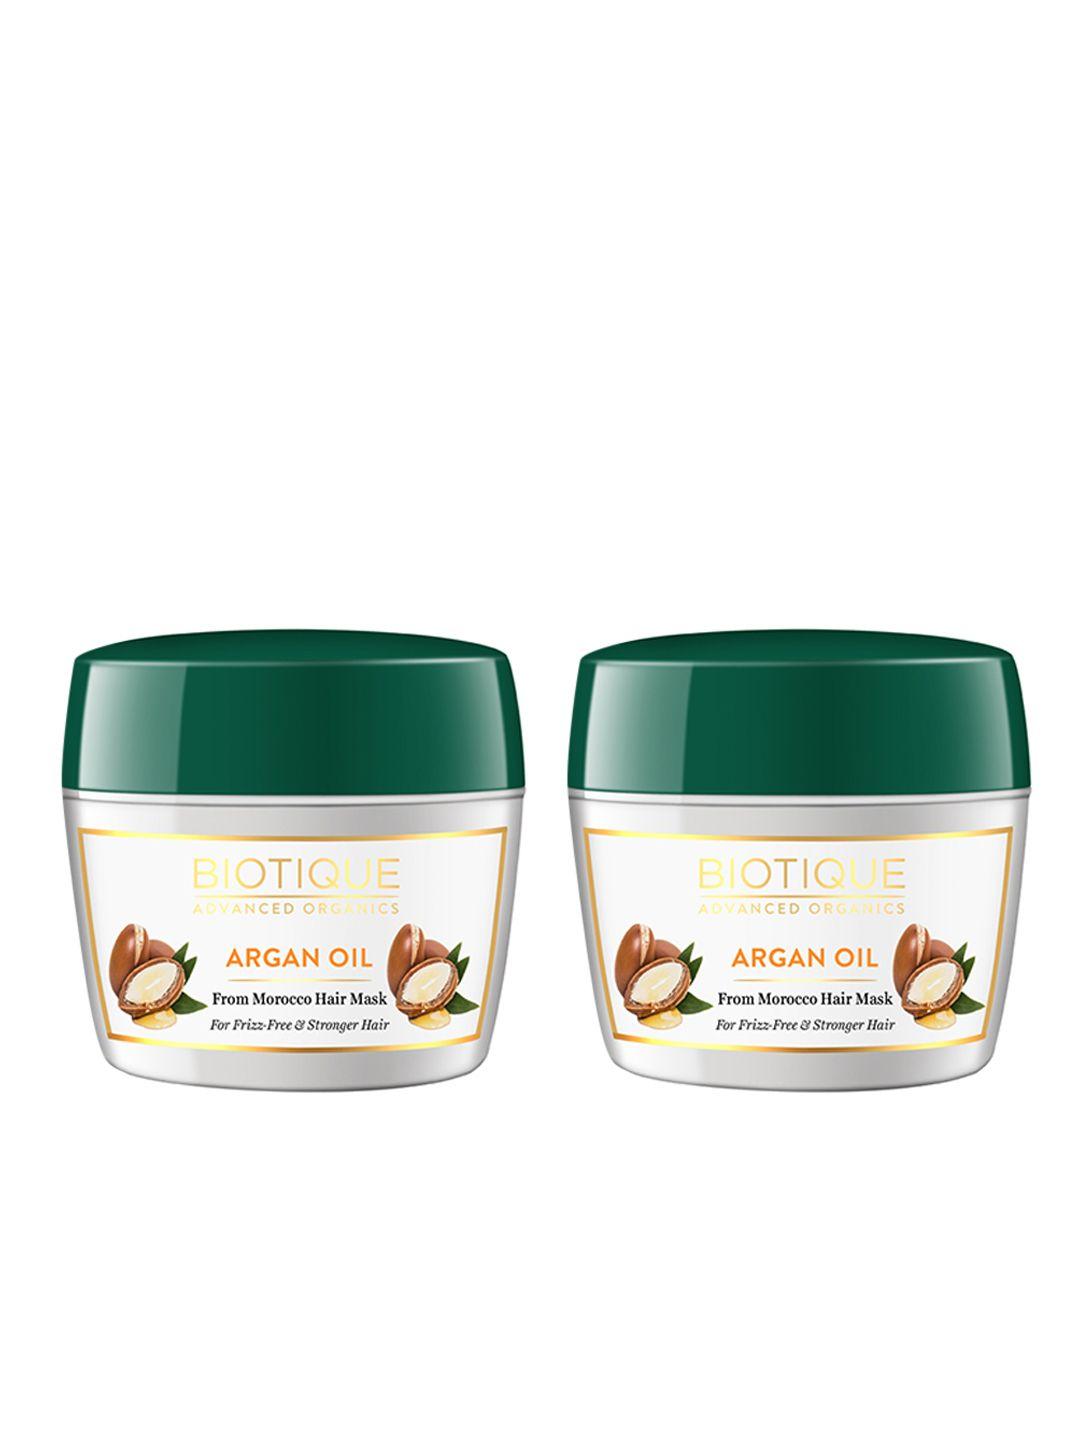 biotique advanced organics set of 2 argan oil from morocco hair mask - 175g each